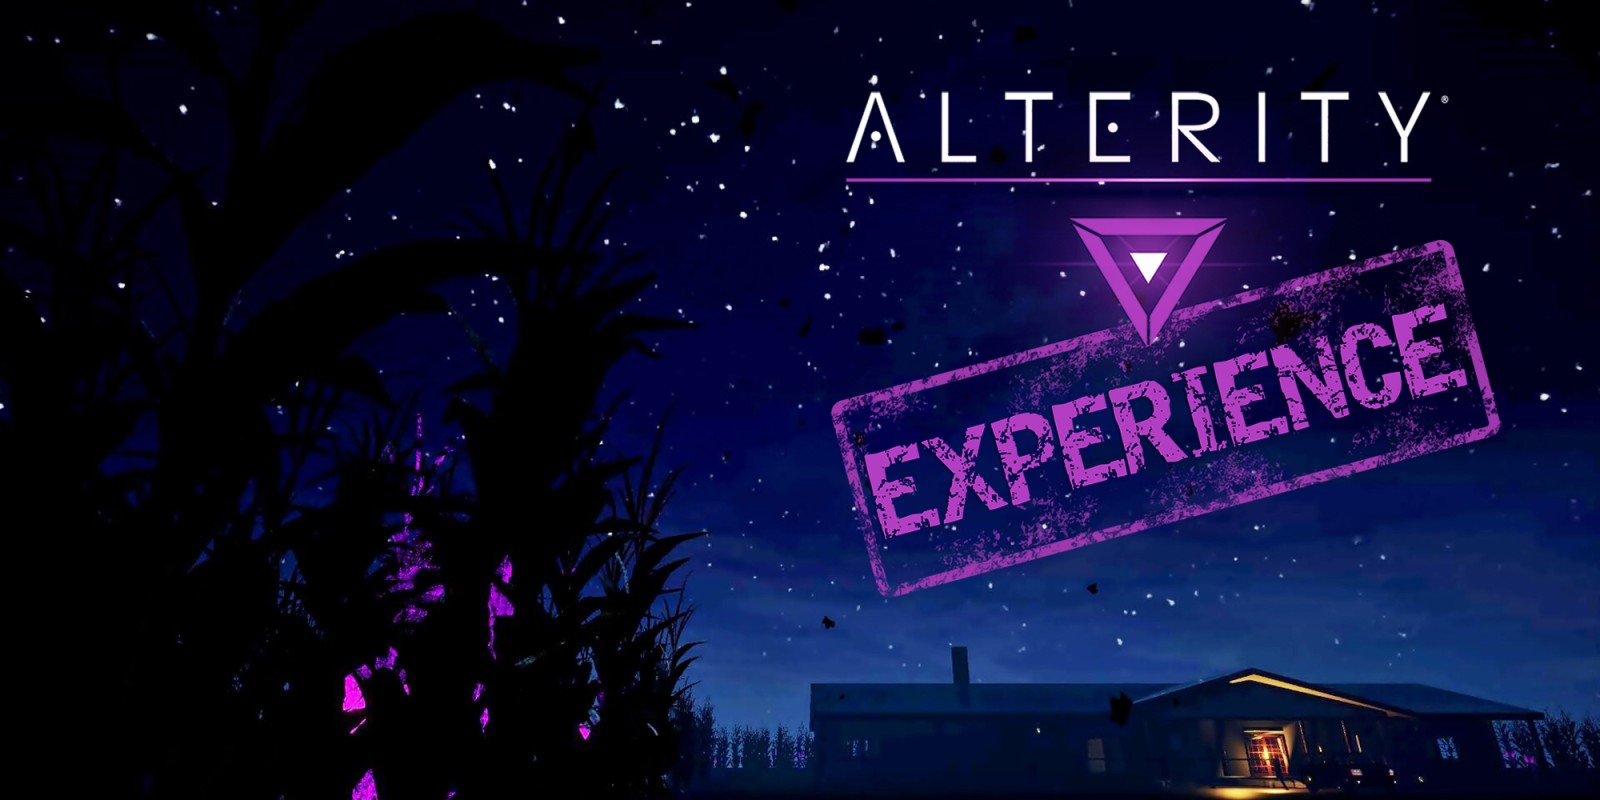 Alterity Experience